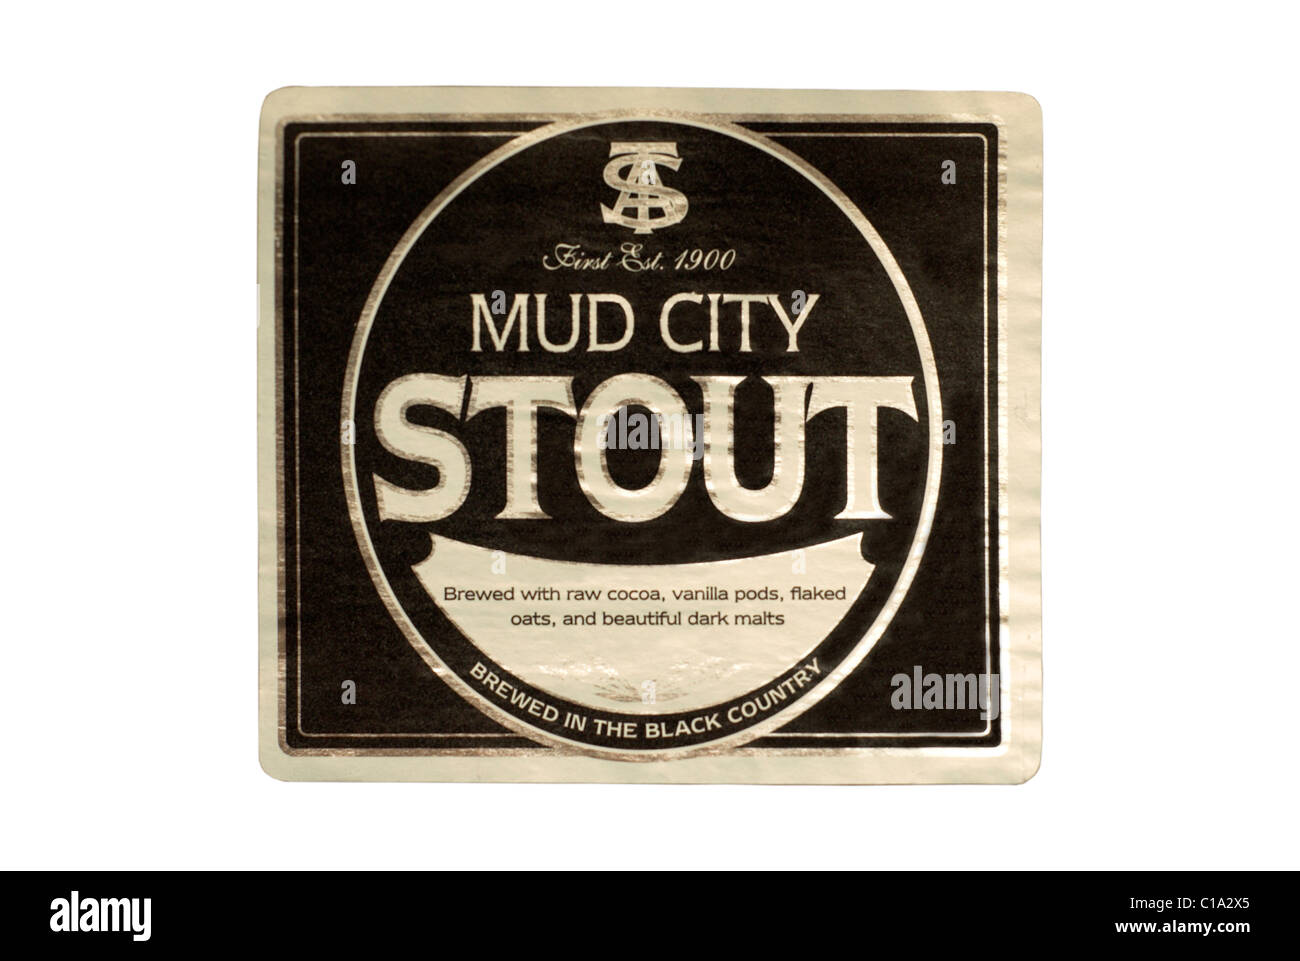 Sadler's Mud City Stout bottle label - current @ 2010. Stock Photo